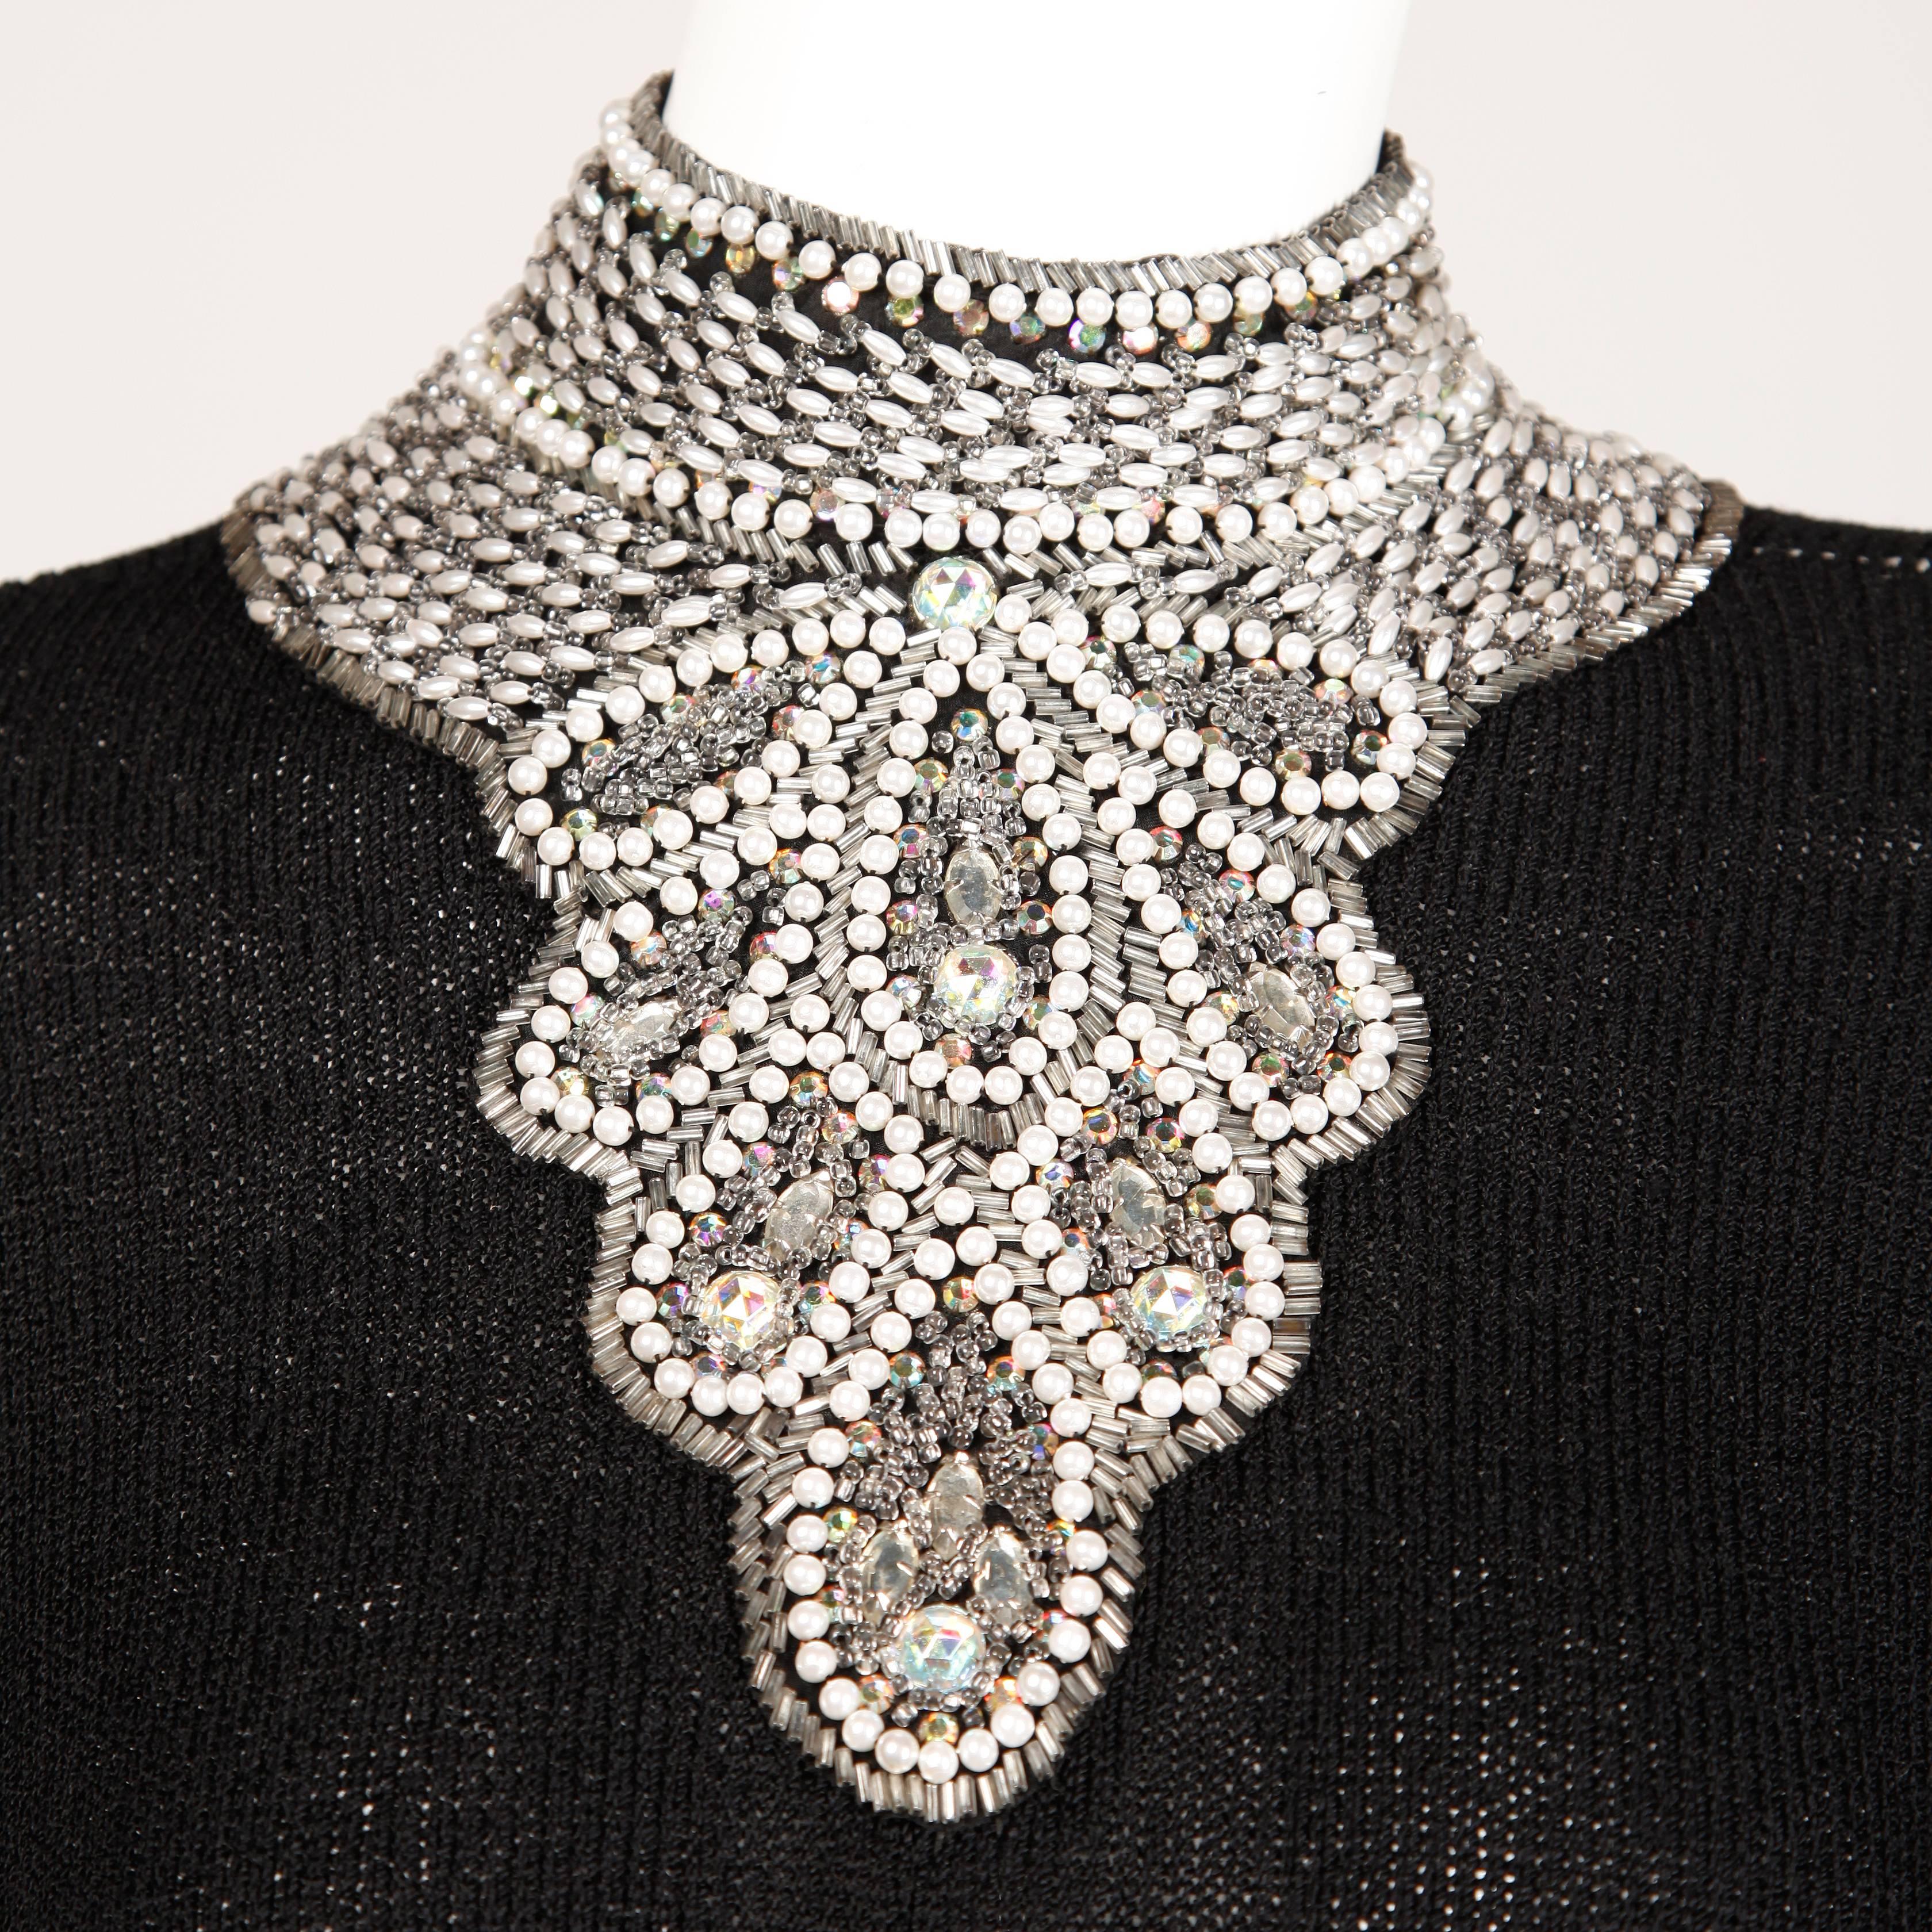 Adolfo 1970s Vintage Black Knit Caftan Dress with Rhinestones and Beads 1